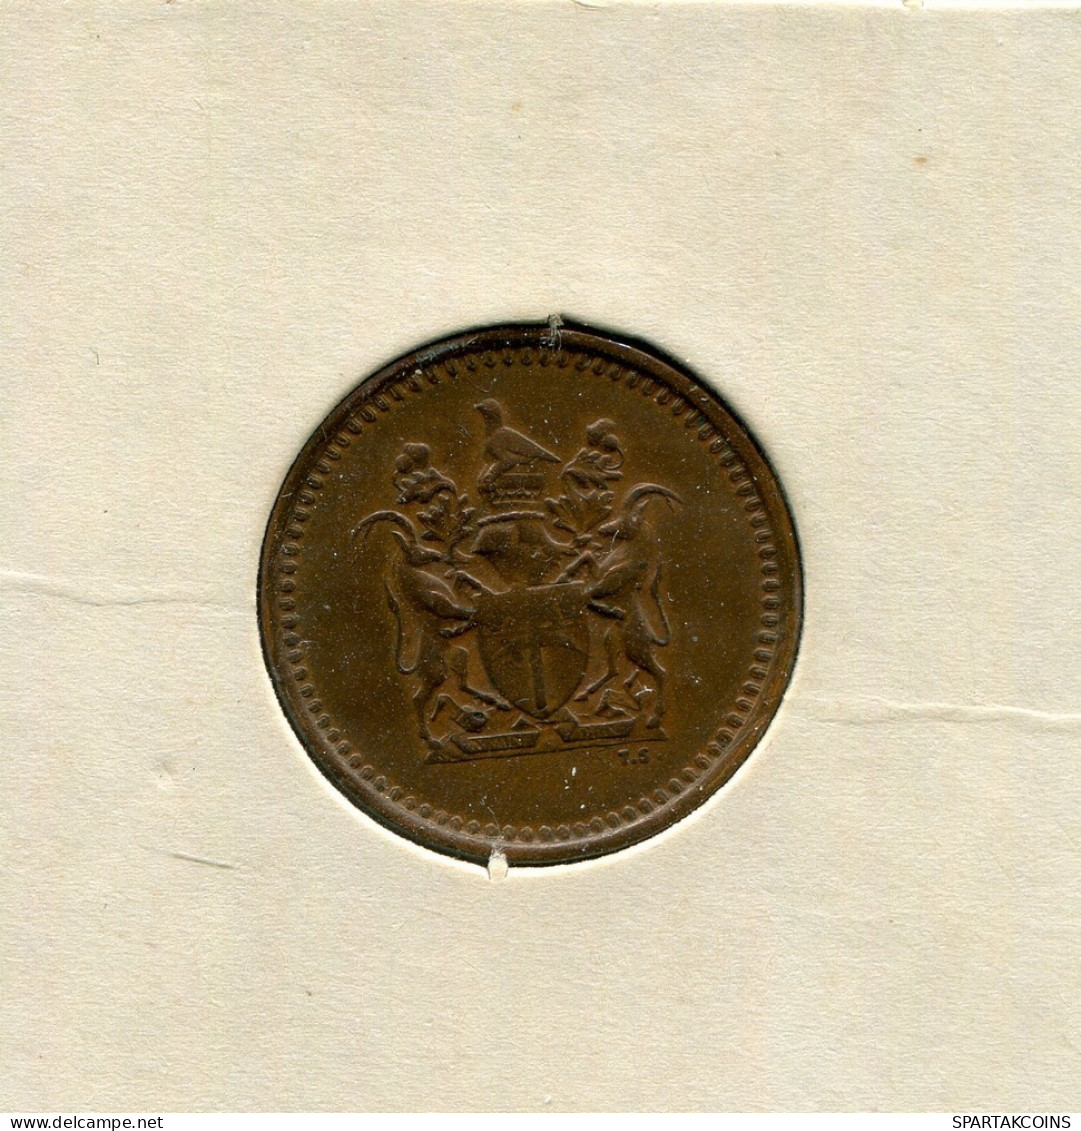 1 CENT 1970 RHODESIEN RHODESIA Münze #AR807.D.A - Rhodesië